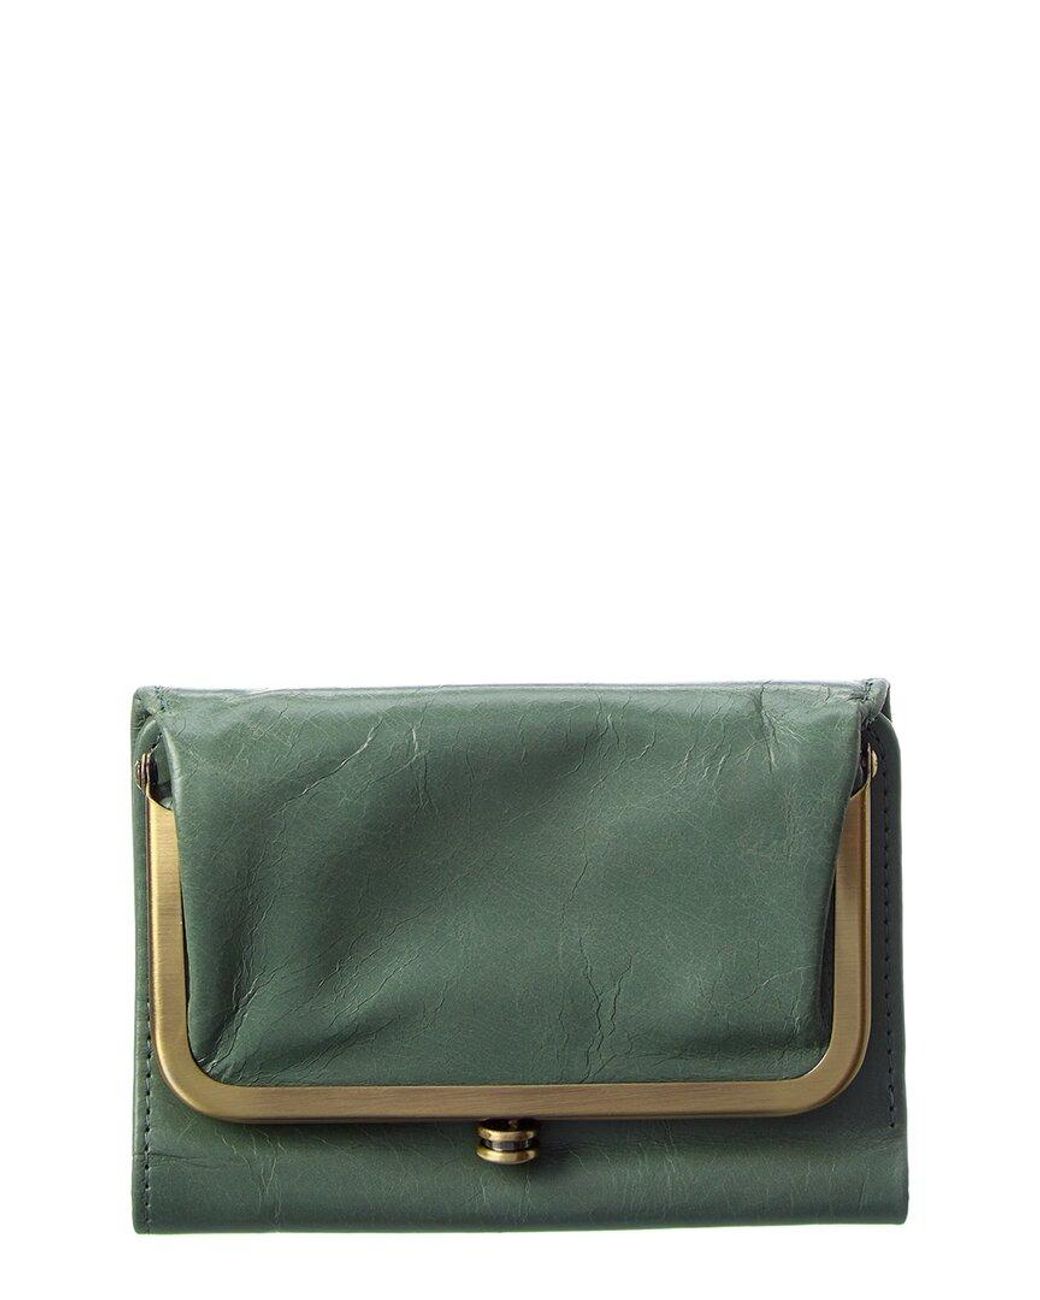 Hobo International Robin Leather French Wallet in Green | Lyst